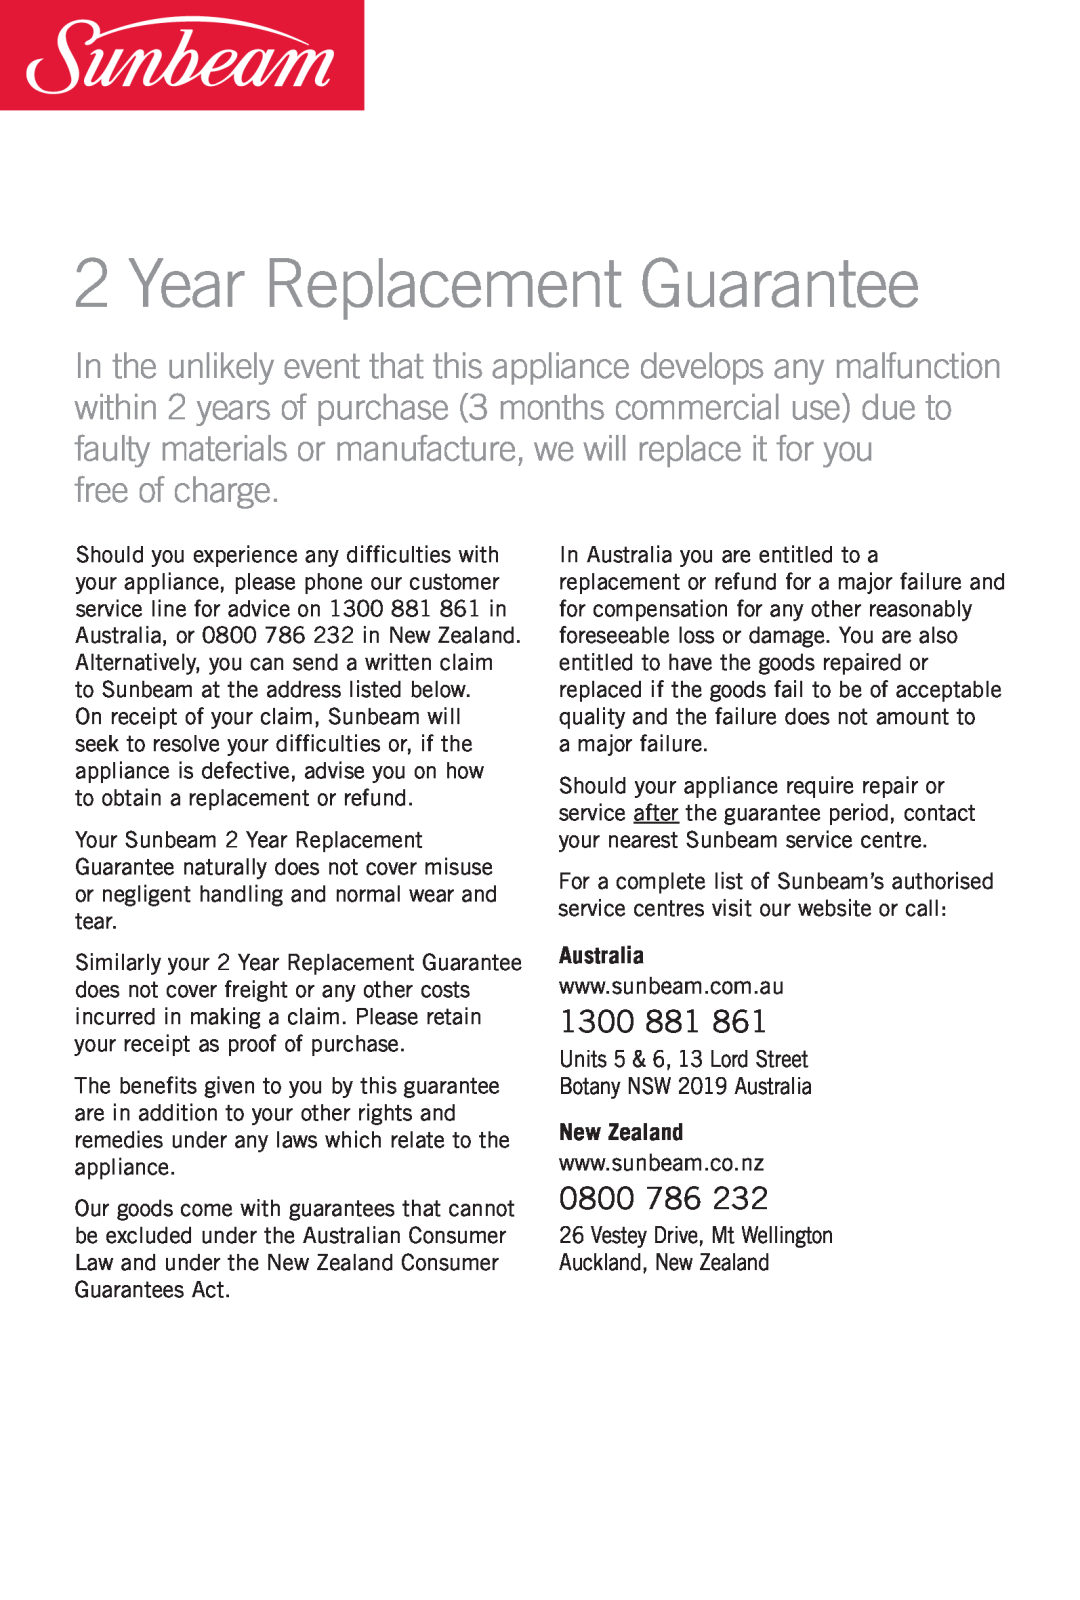 Sunbeam SR7000 manual 1300, 0800, Year Replacement Guarantee, free of charge, Australia, New Zealand 